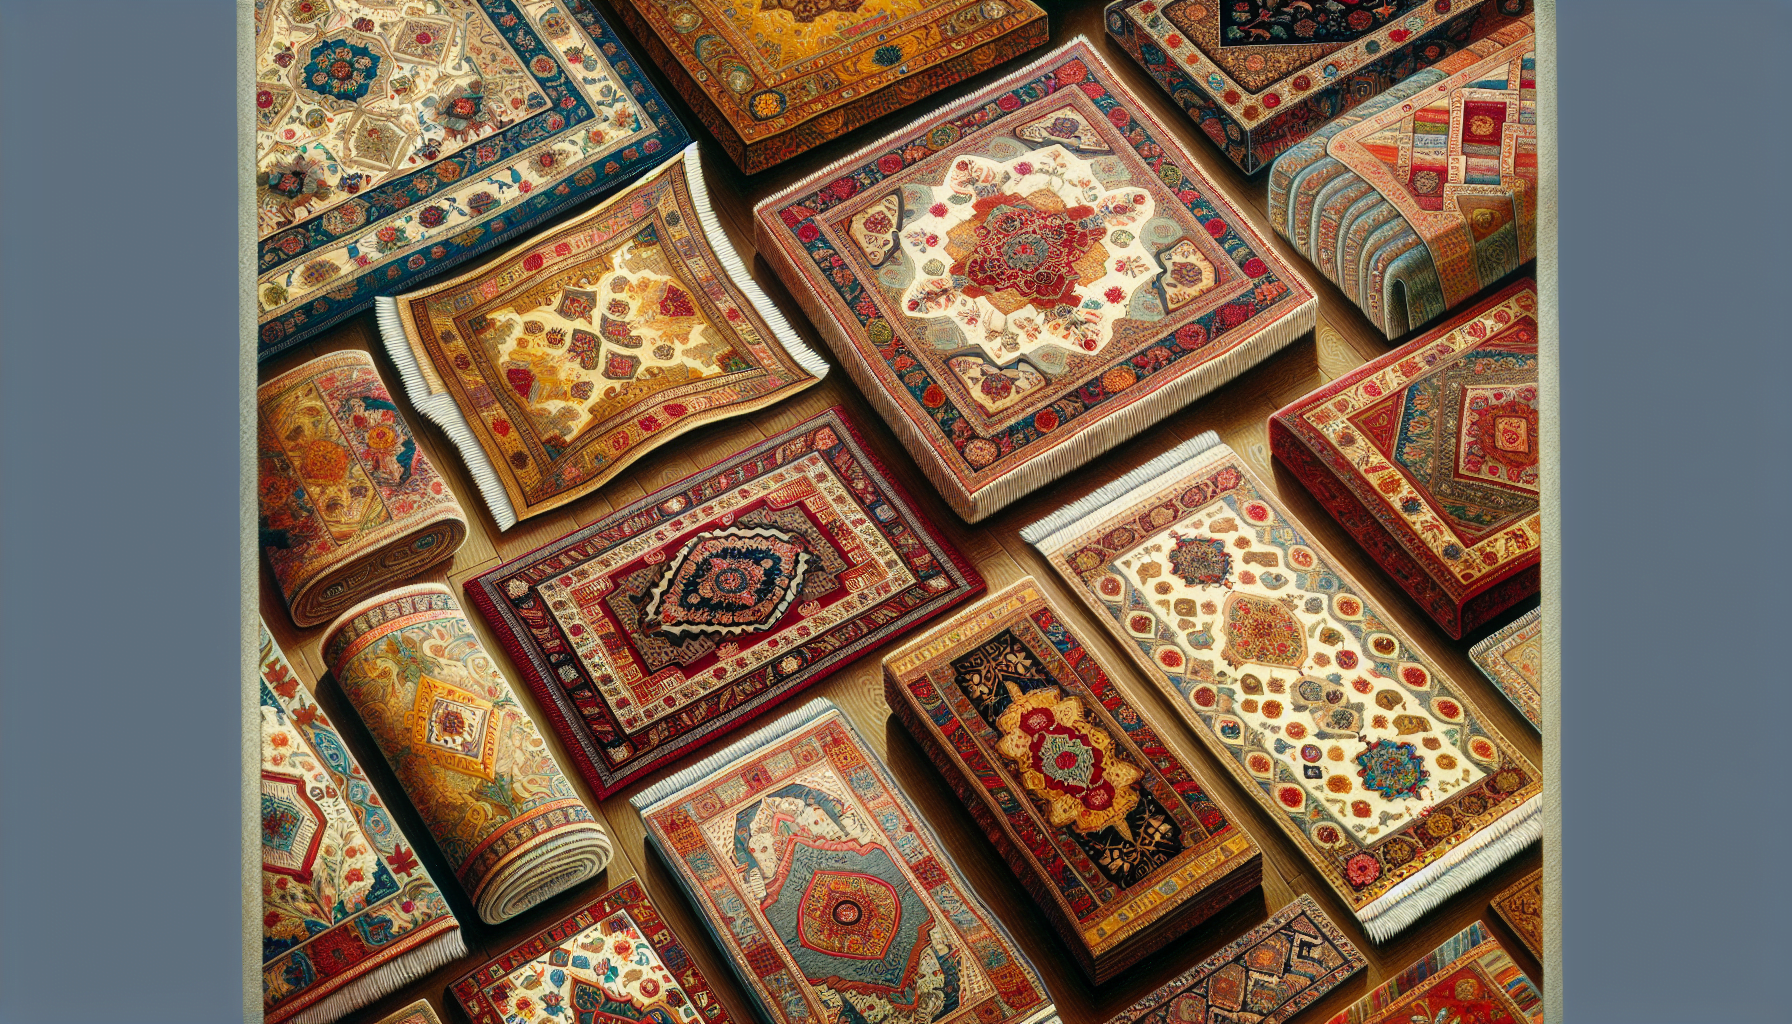 Illustration of rug origins through symbolism